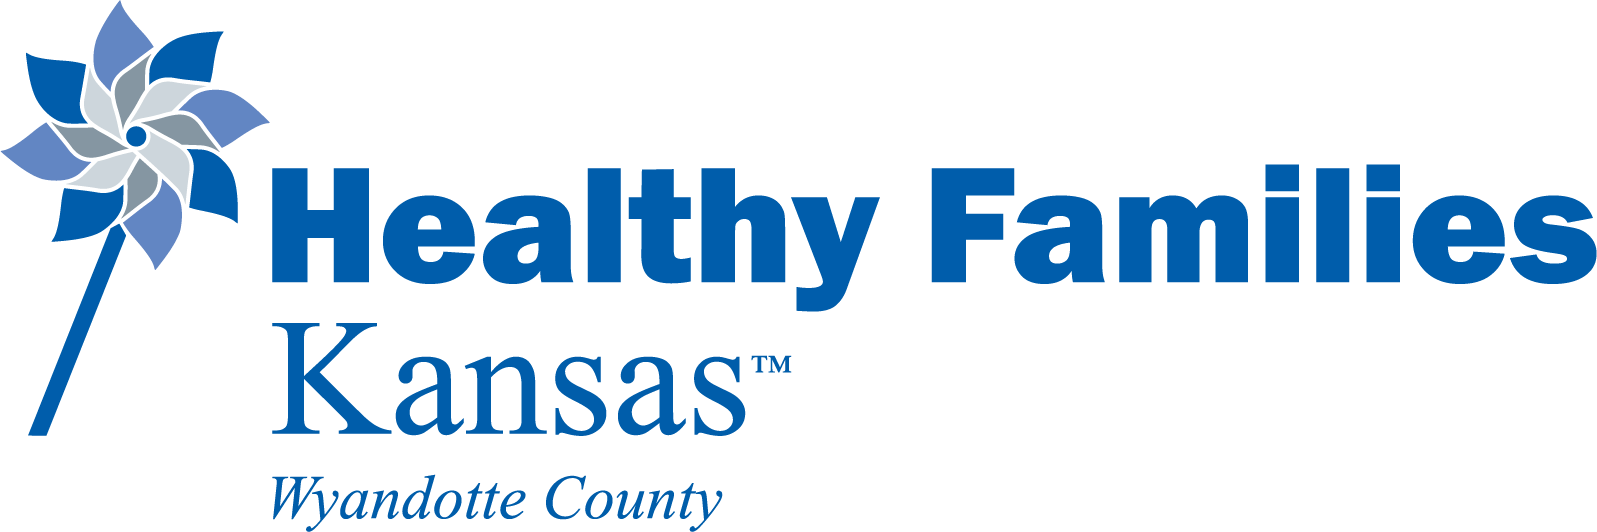 Healthy Families Kansas Wyandotte County logo